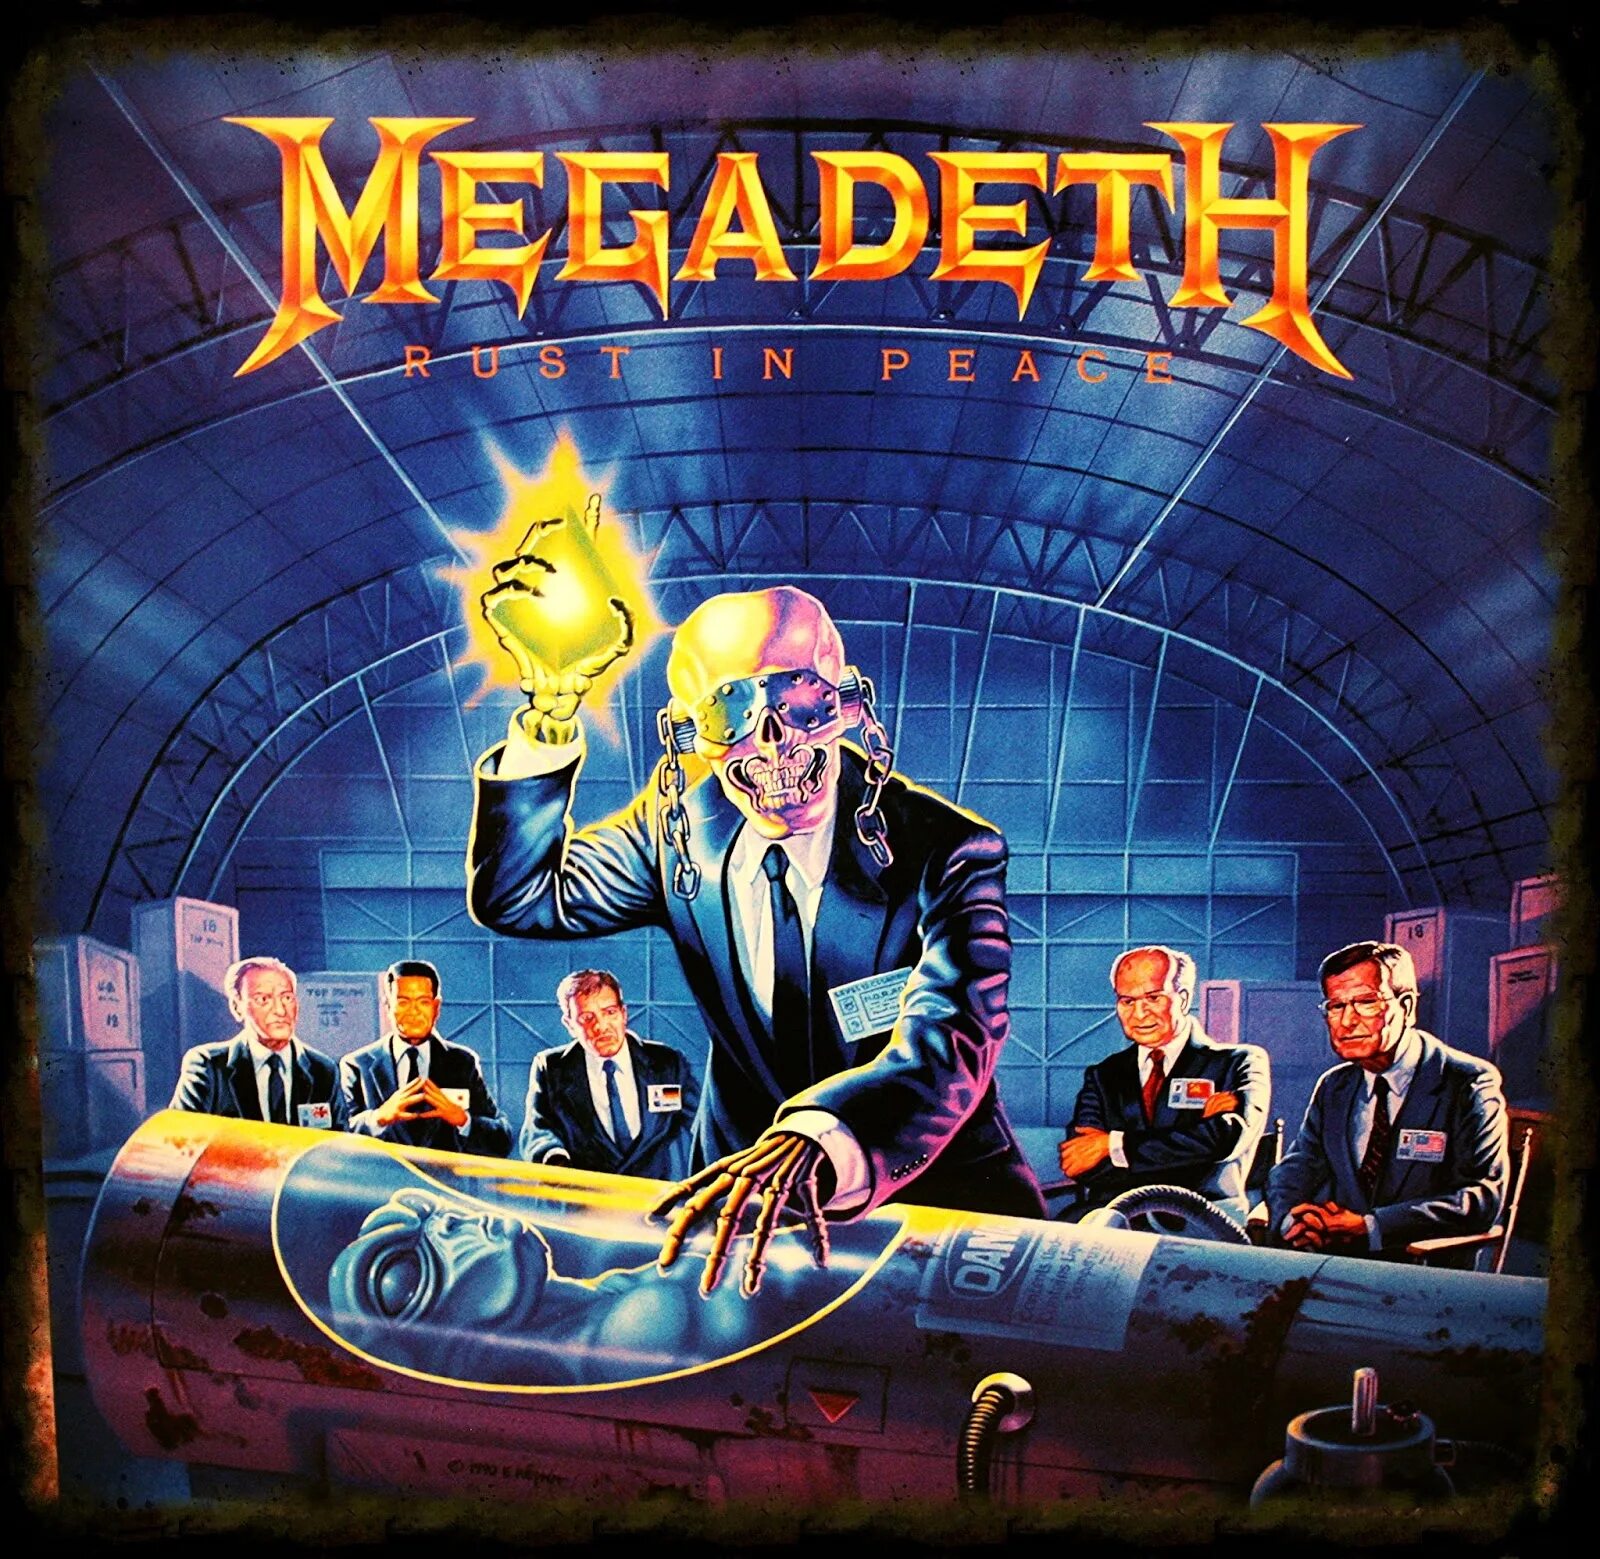 Megadeth обложки. Группа Megadeth обложки. Megadeth Rust in Peace обложка. Megadeth Peace sells обложка. Megadeth tornado of souls